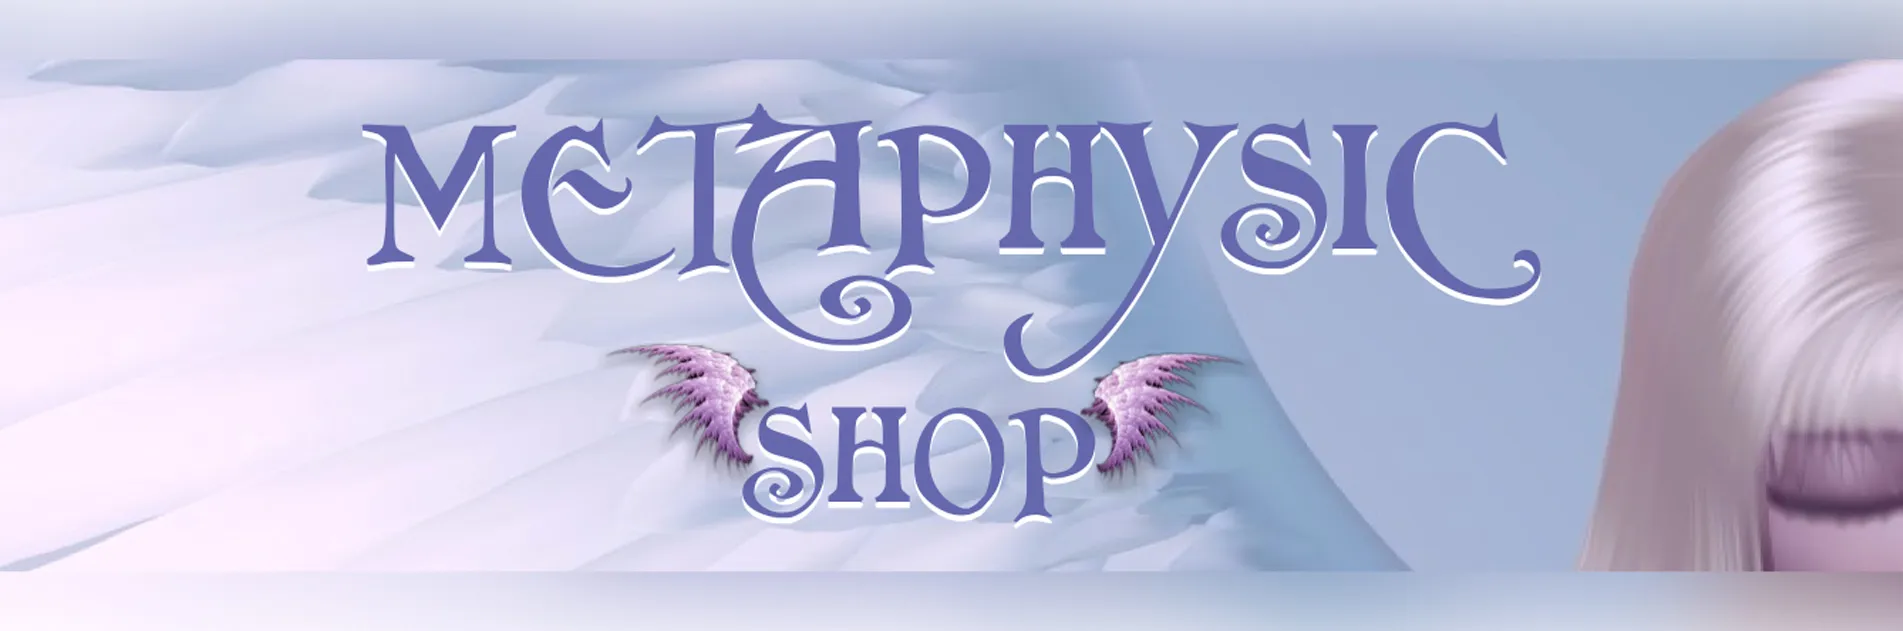 metaphysic shop